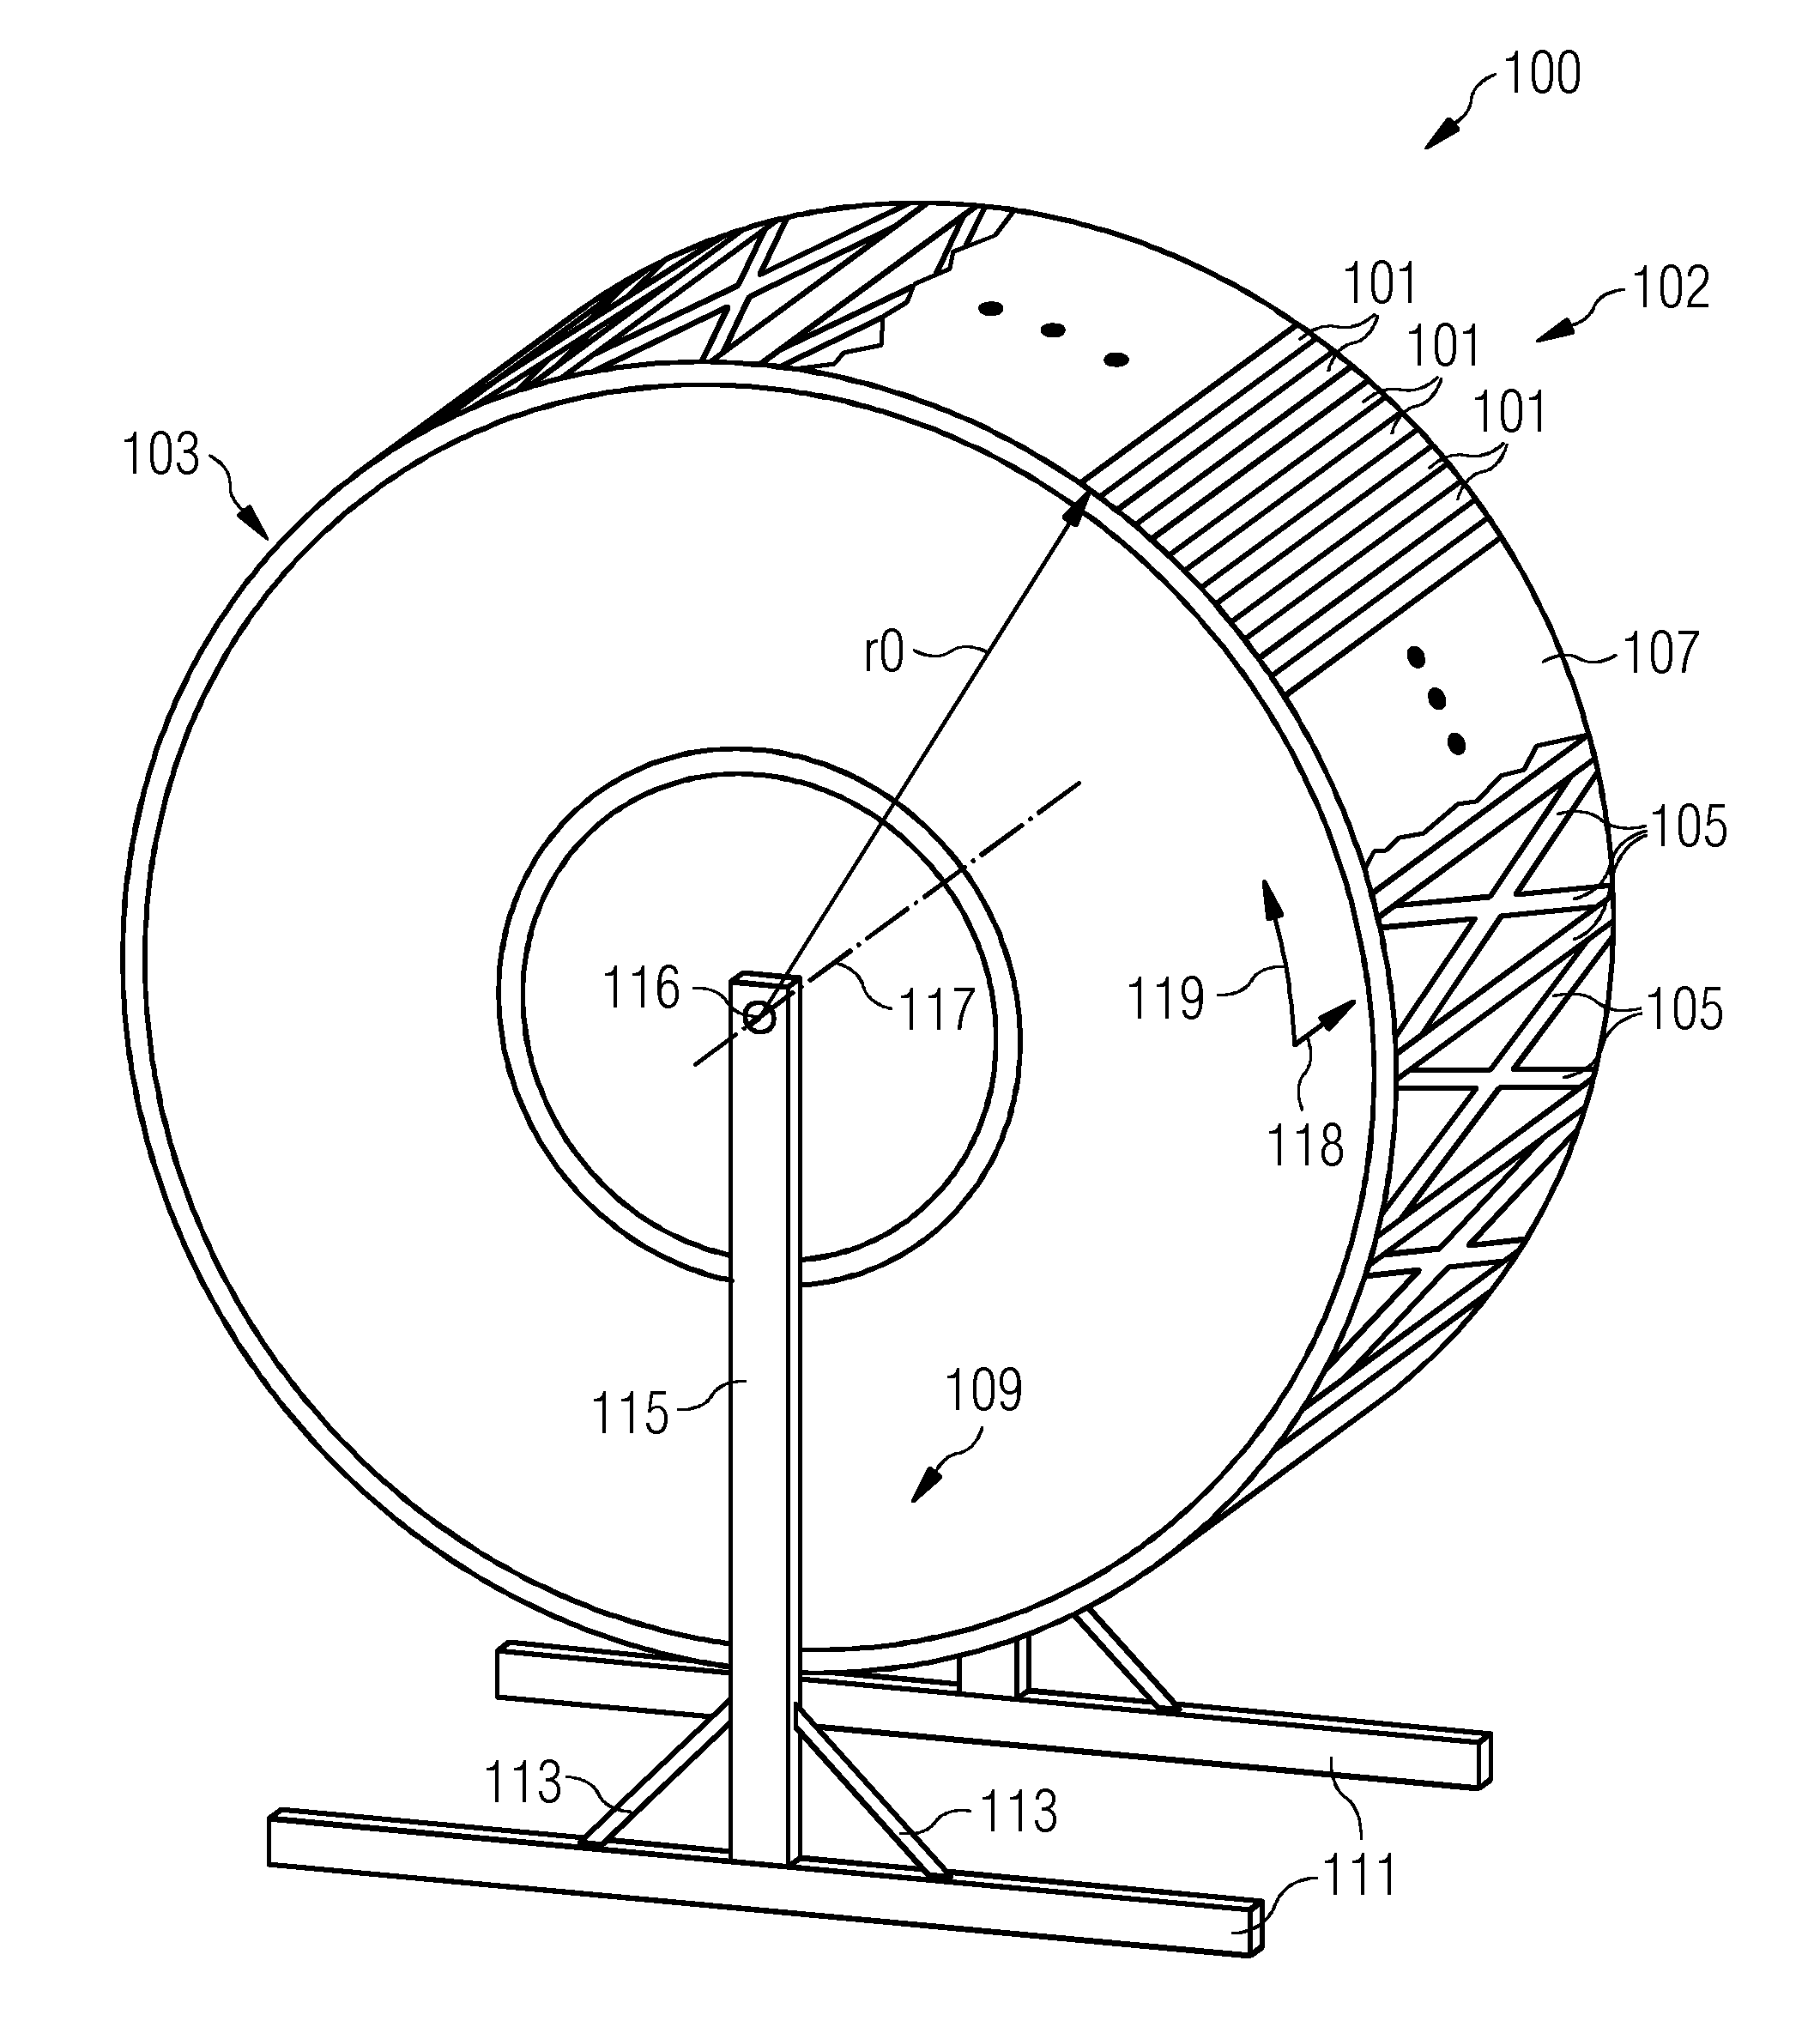 Manufacturing a generator rotor